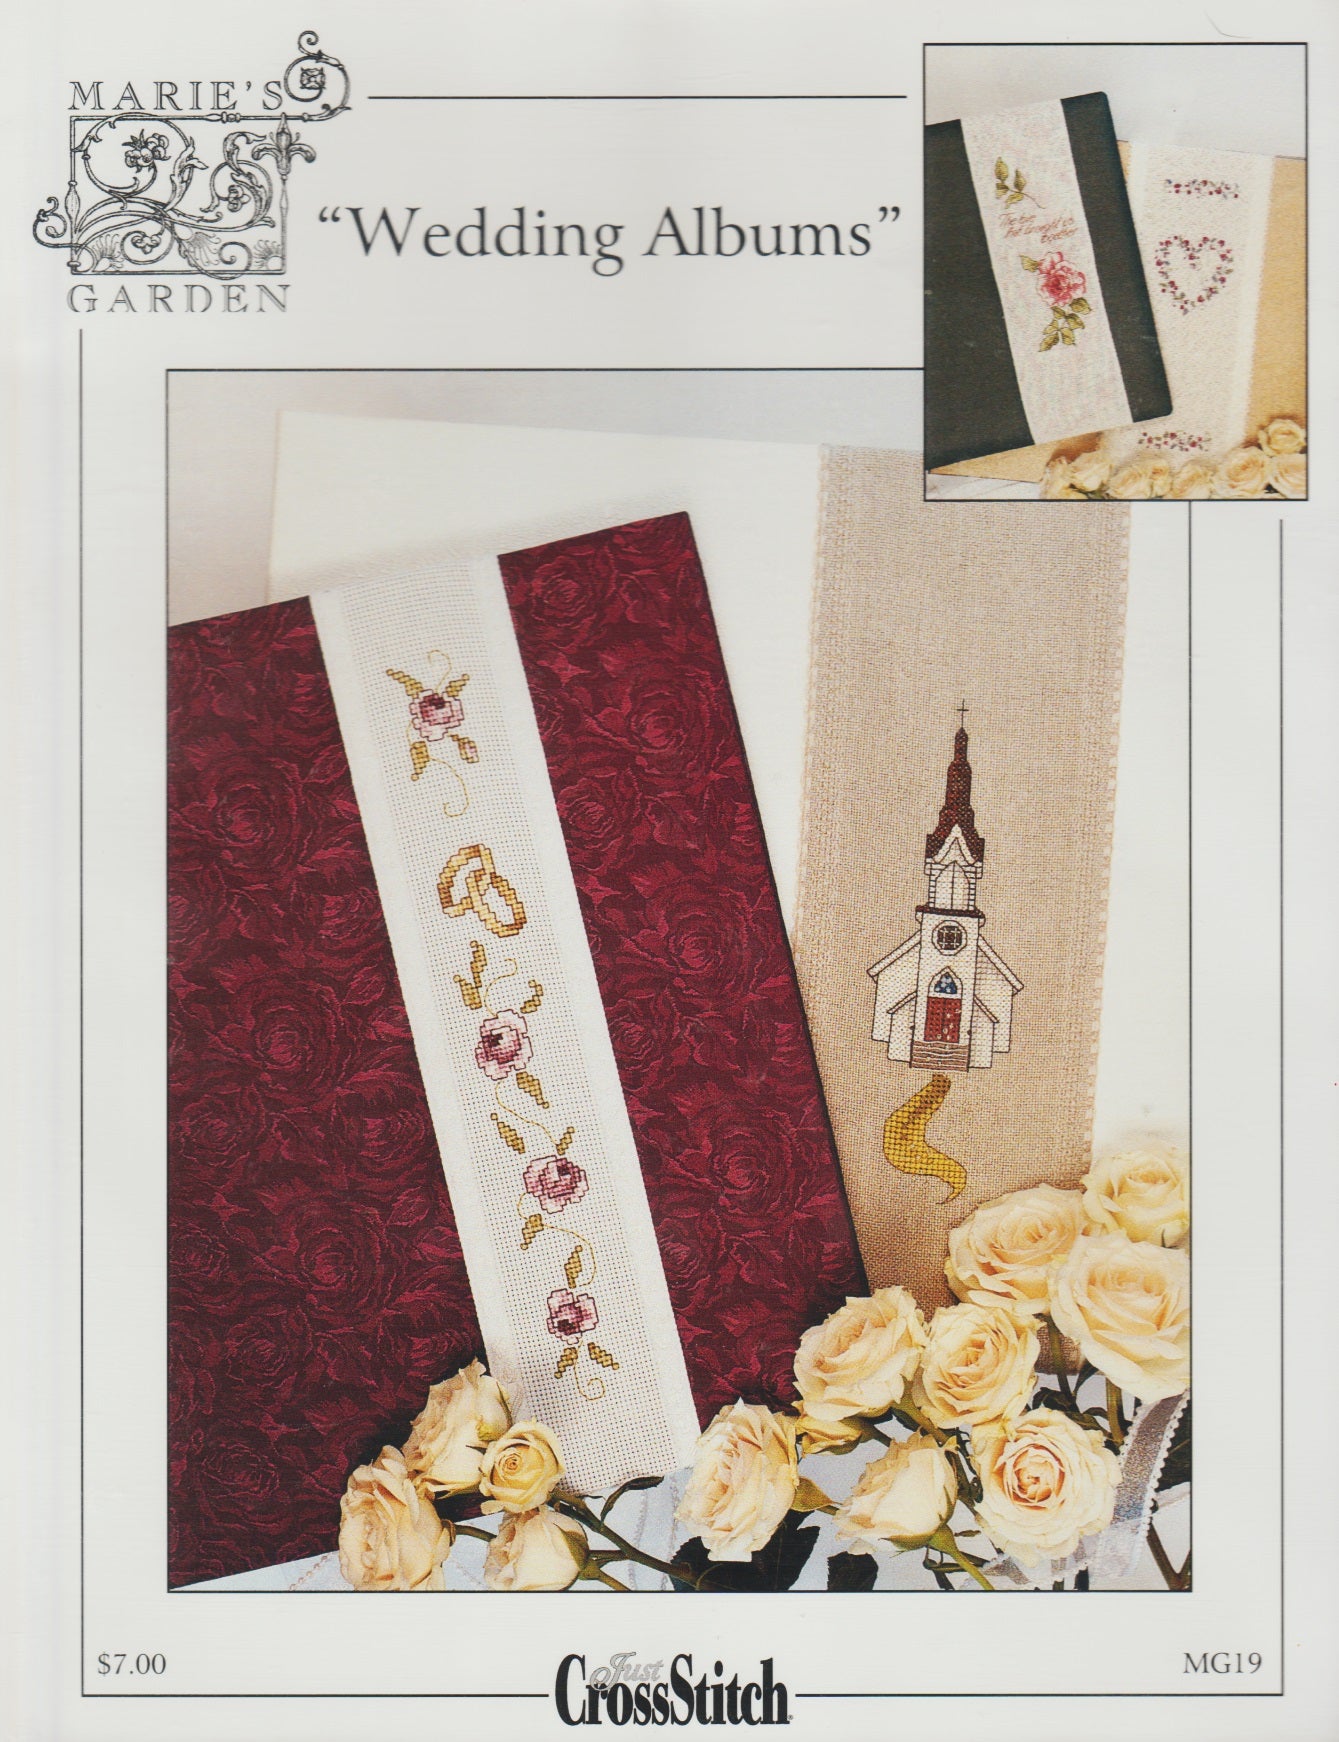 Just CrossStitch Marie's Garden Wedding Albums MG19 cross stitch pattern